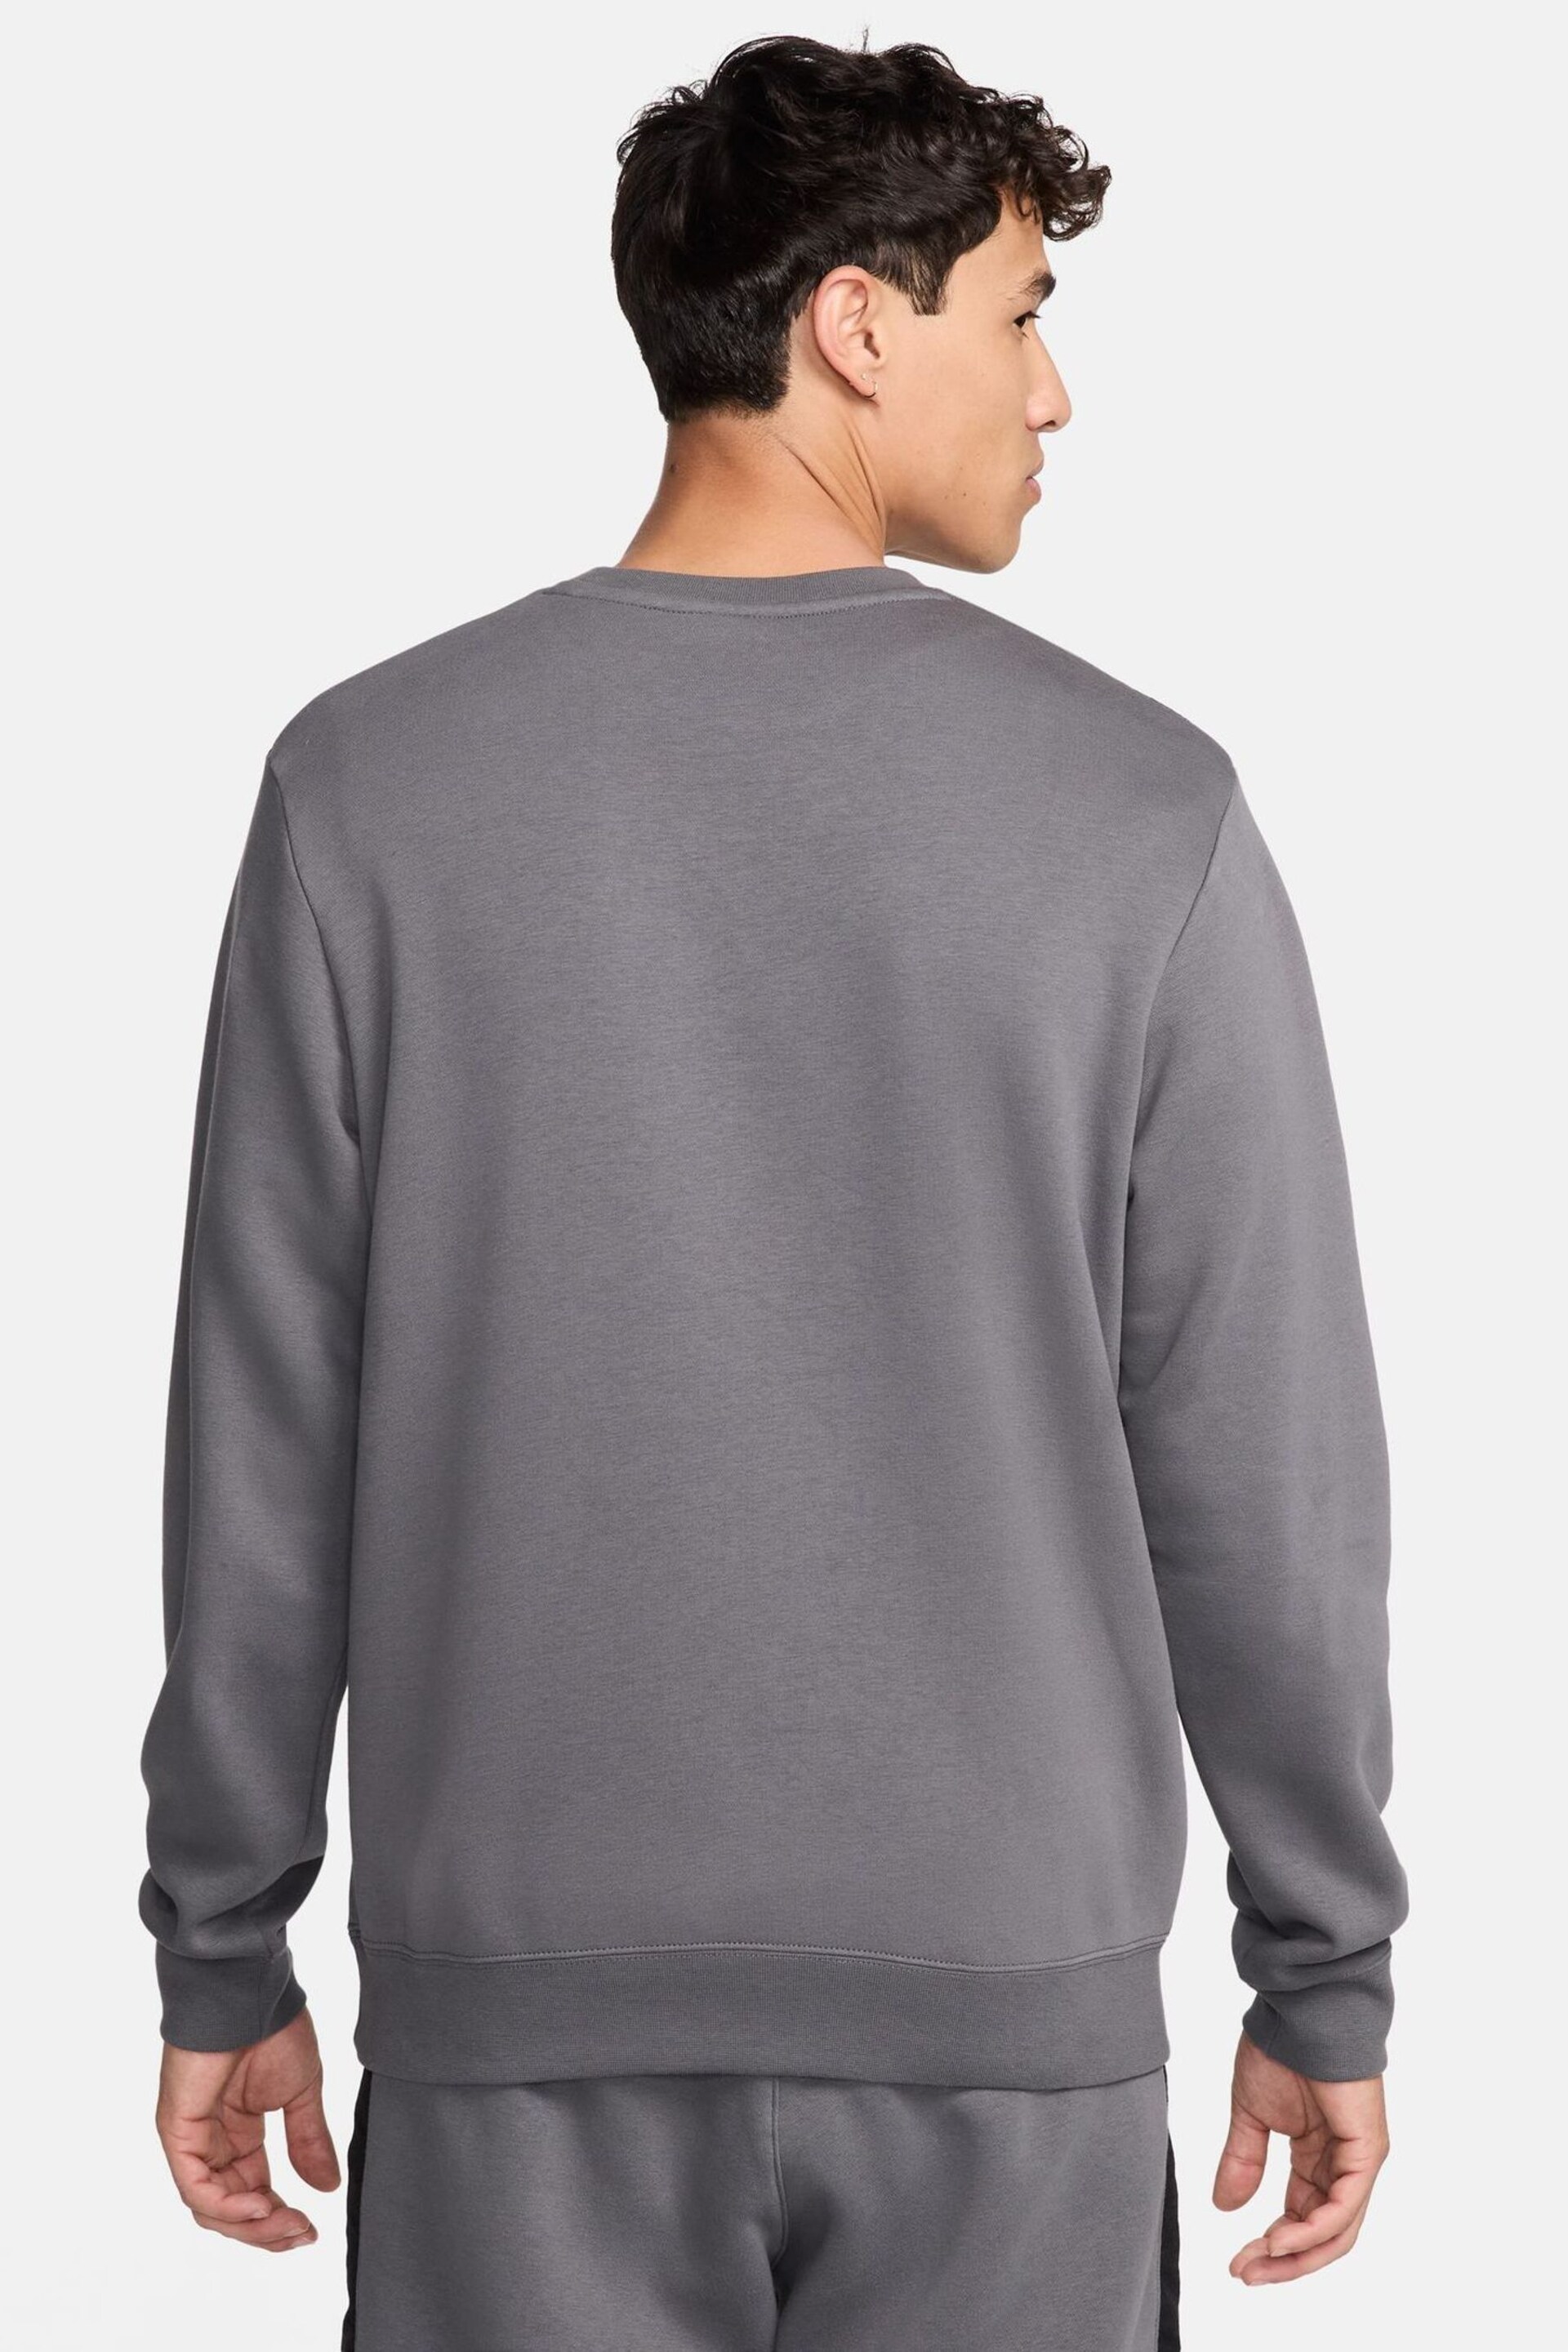 Nike Grey Sportswear Colourblock Crew Sweatshirt - Image 2 of 5